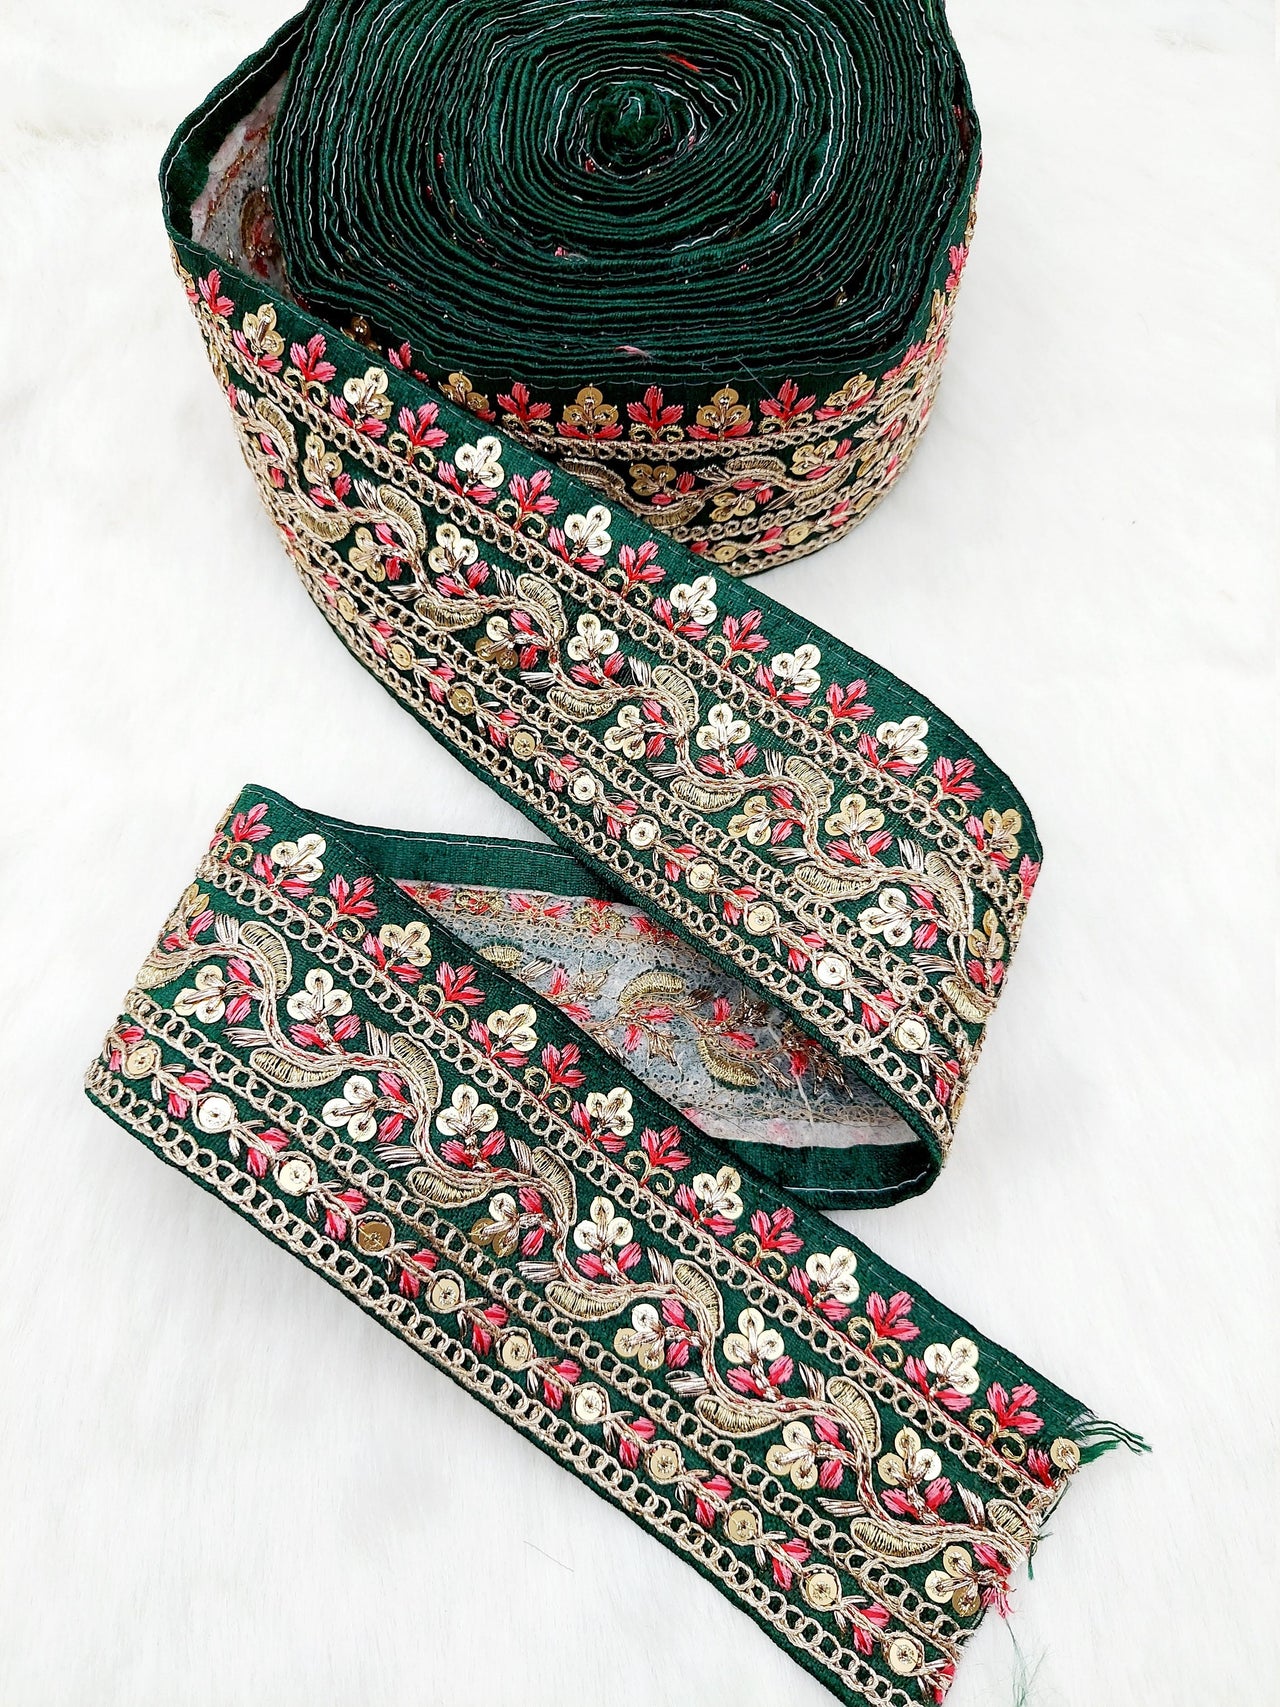 Art Silk Fabric Sari Border Trim with Floral Embroidery and Gold Sequins, Decorative Trim, Indian Sari Border